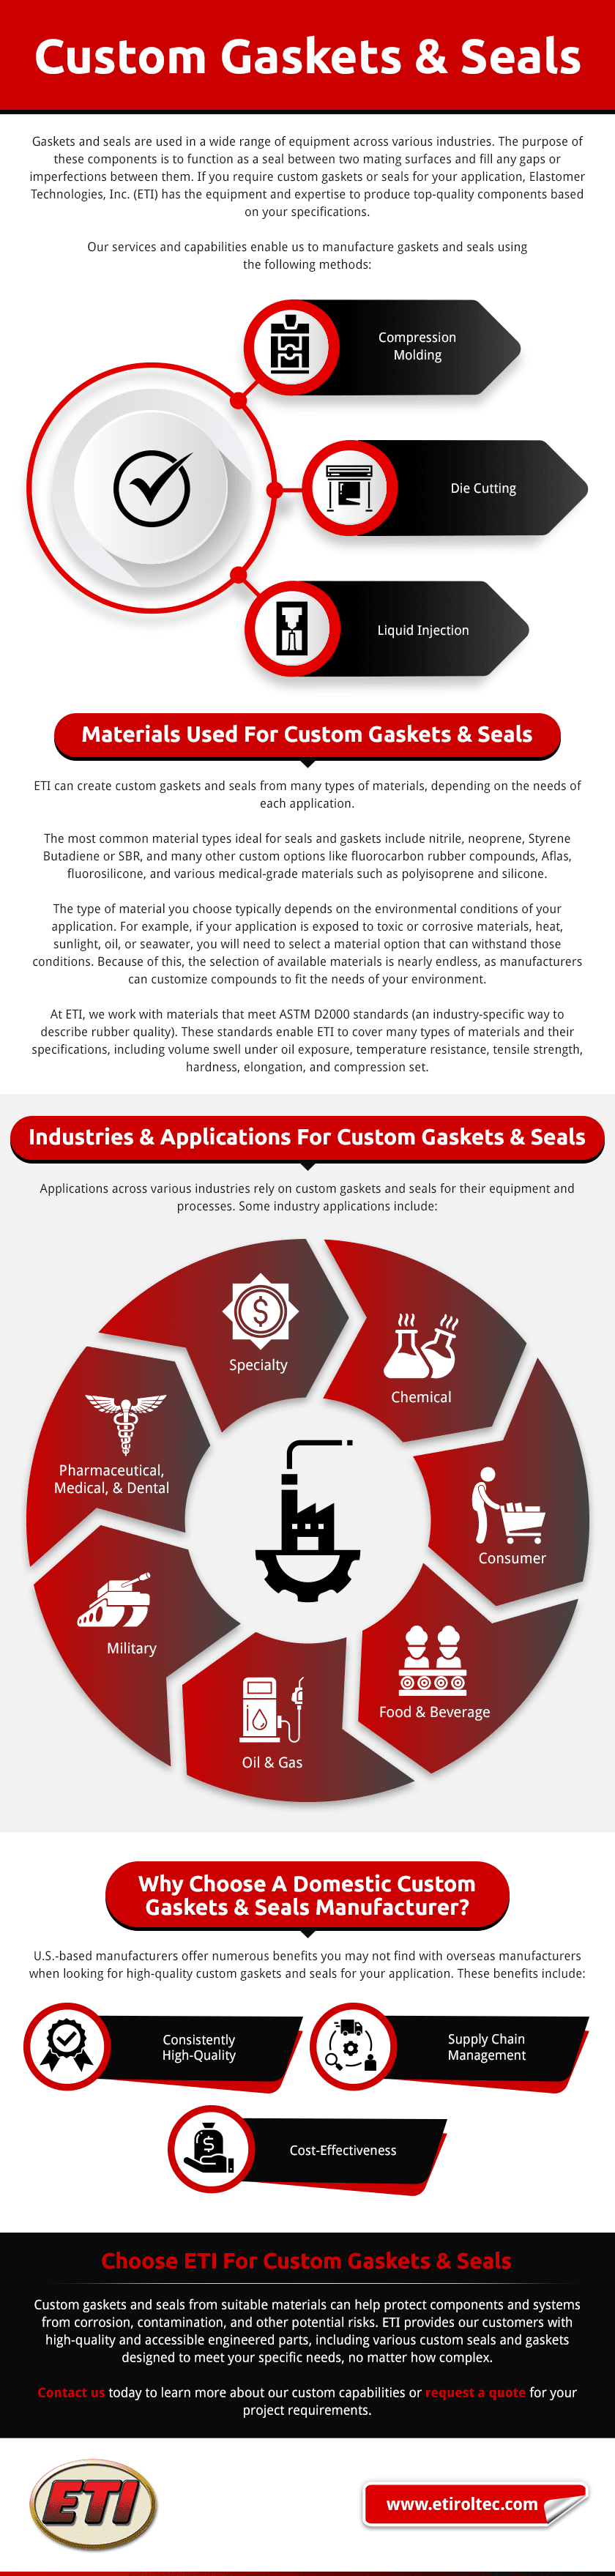 Custom-Gaskets-&-Seals